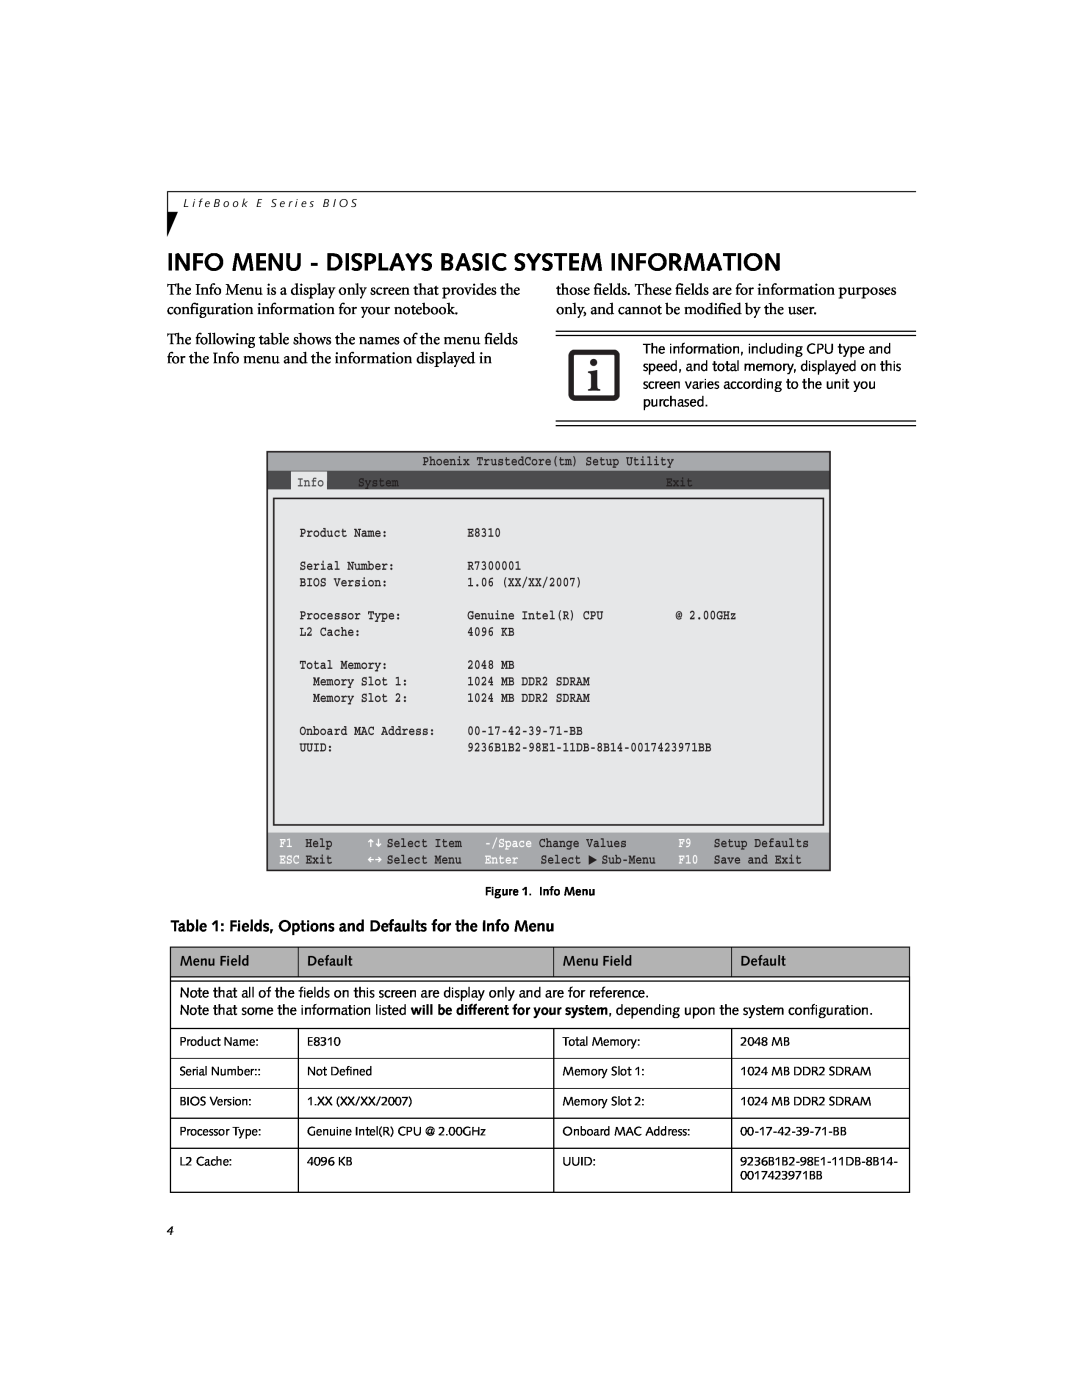 Fujitsu Siemens Computers E8310 manual Info Menu - Displays Basic System Information 